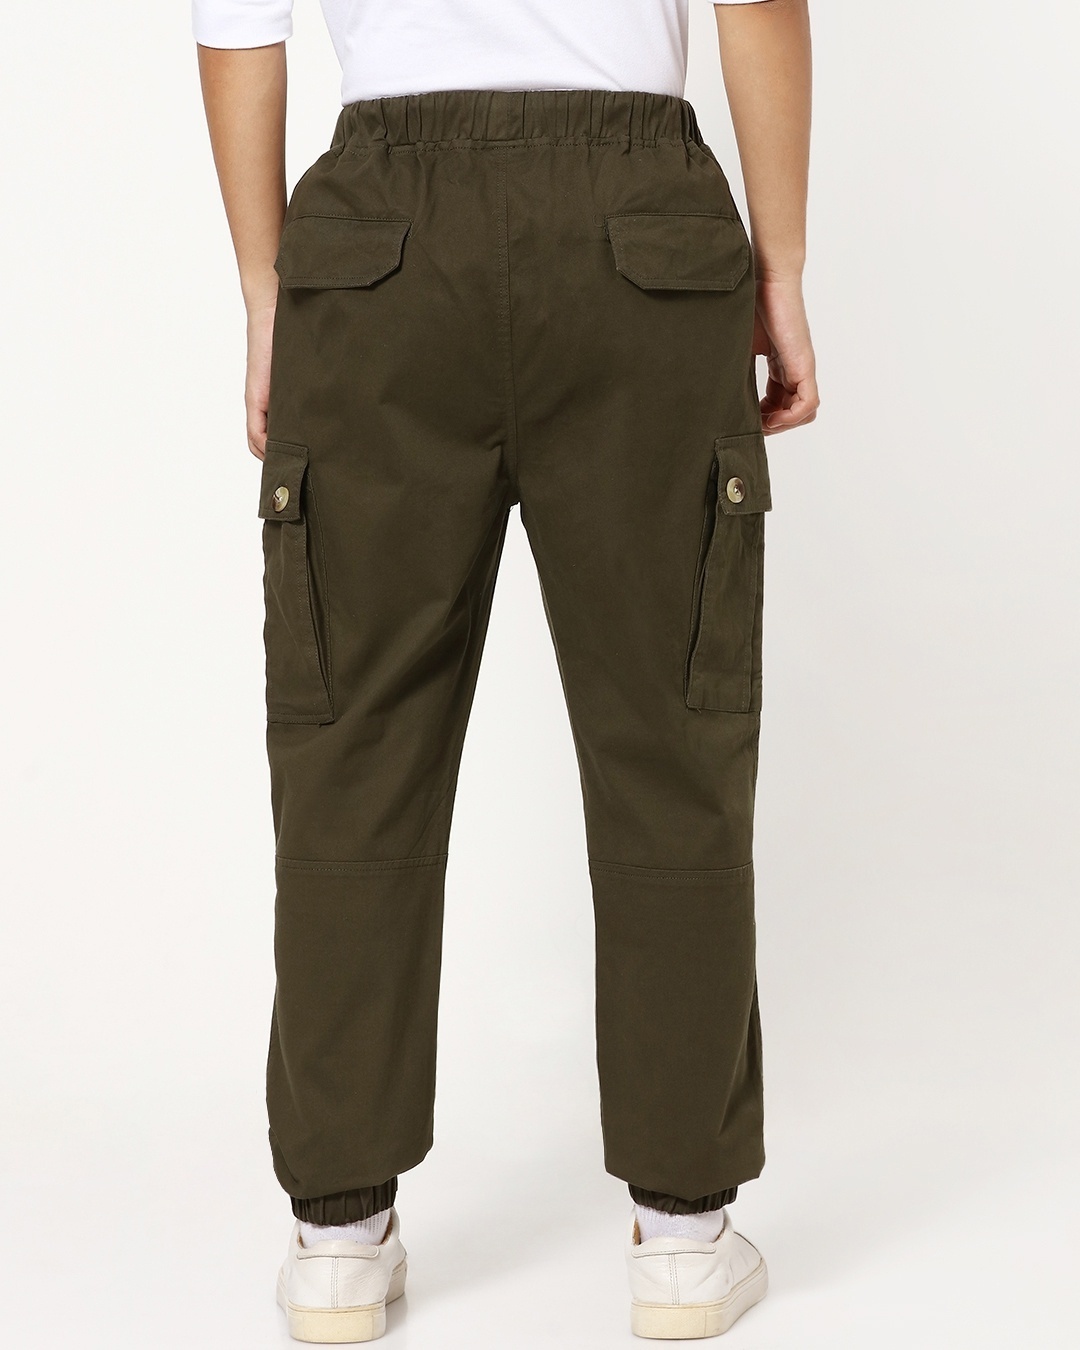 Shop Men's Olive Elastic Waistband Cargo Pants-Design